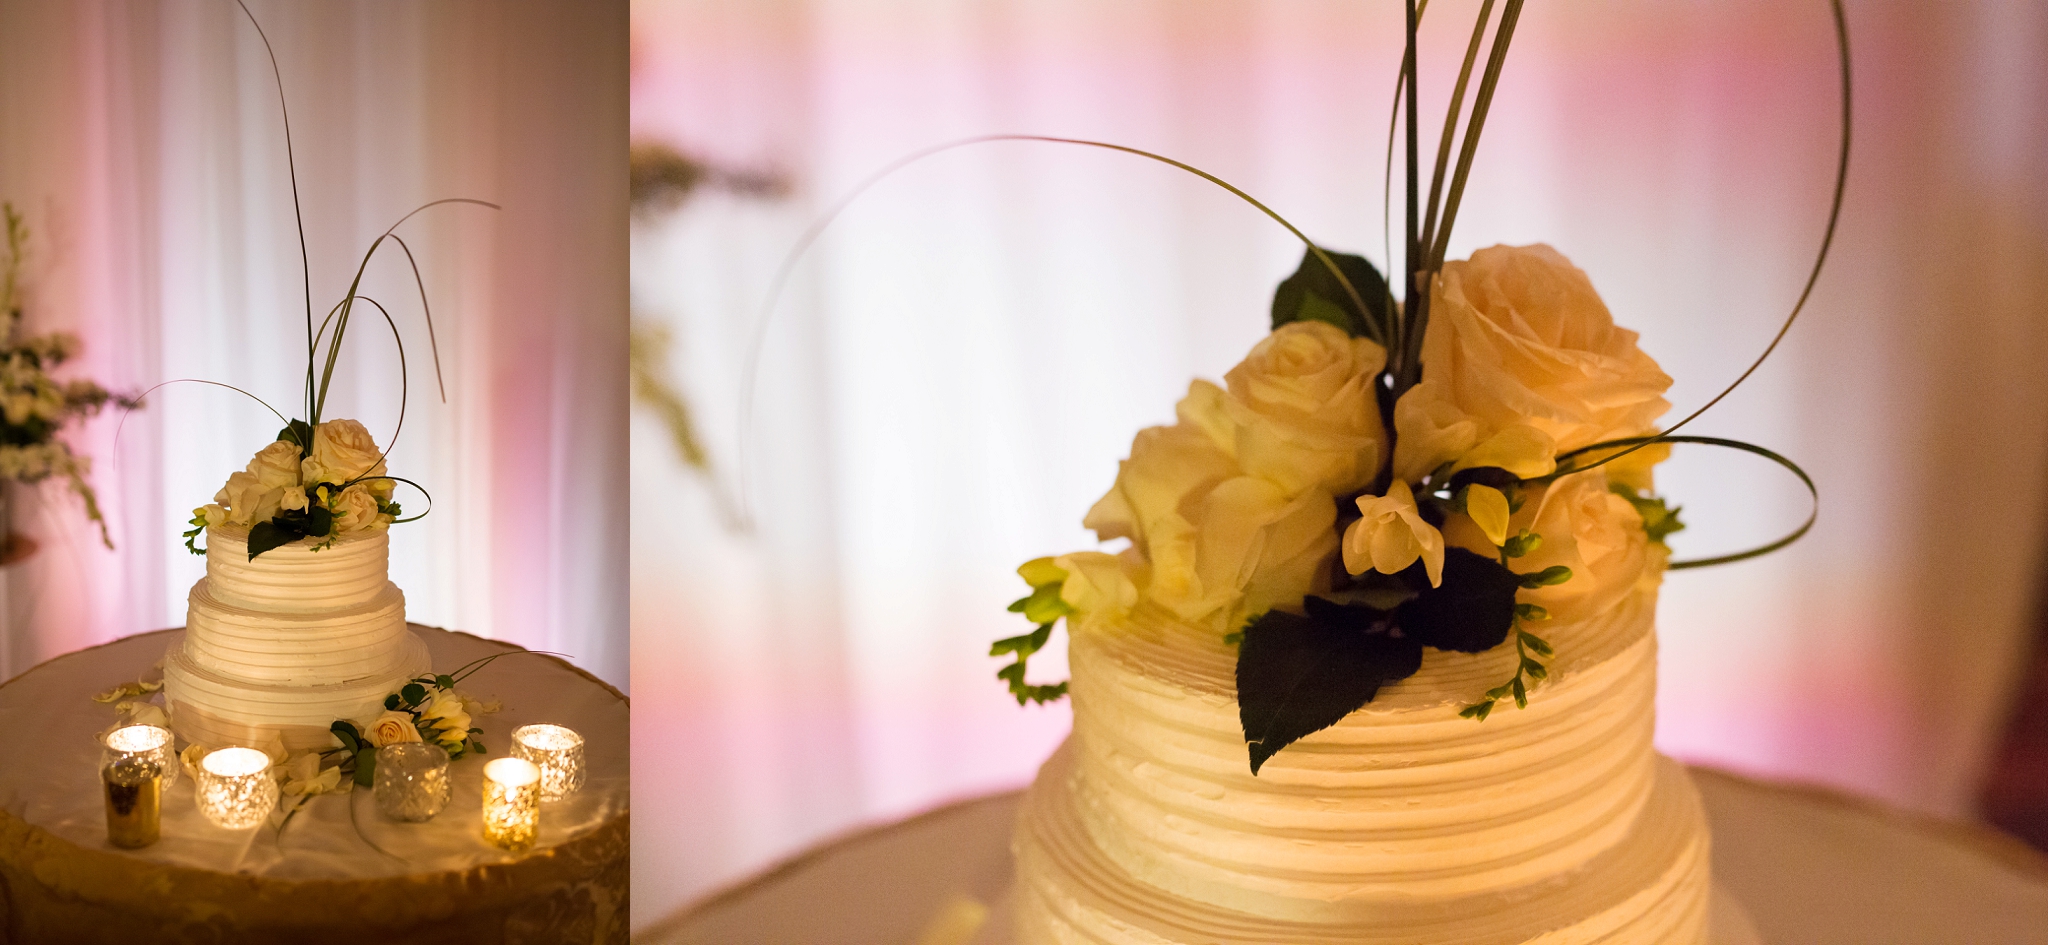 Medicine Hat Lodge Wedding Photos Romantic Candle Lit Reception Cake